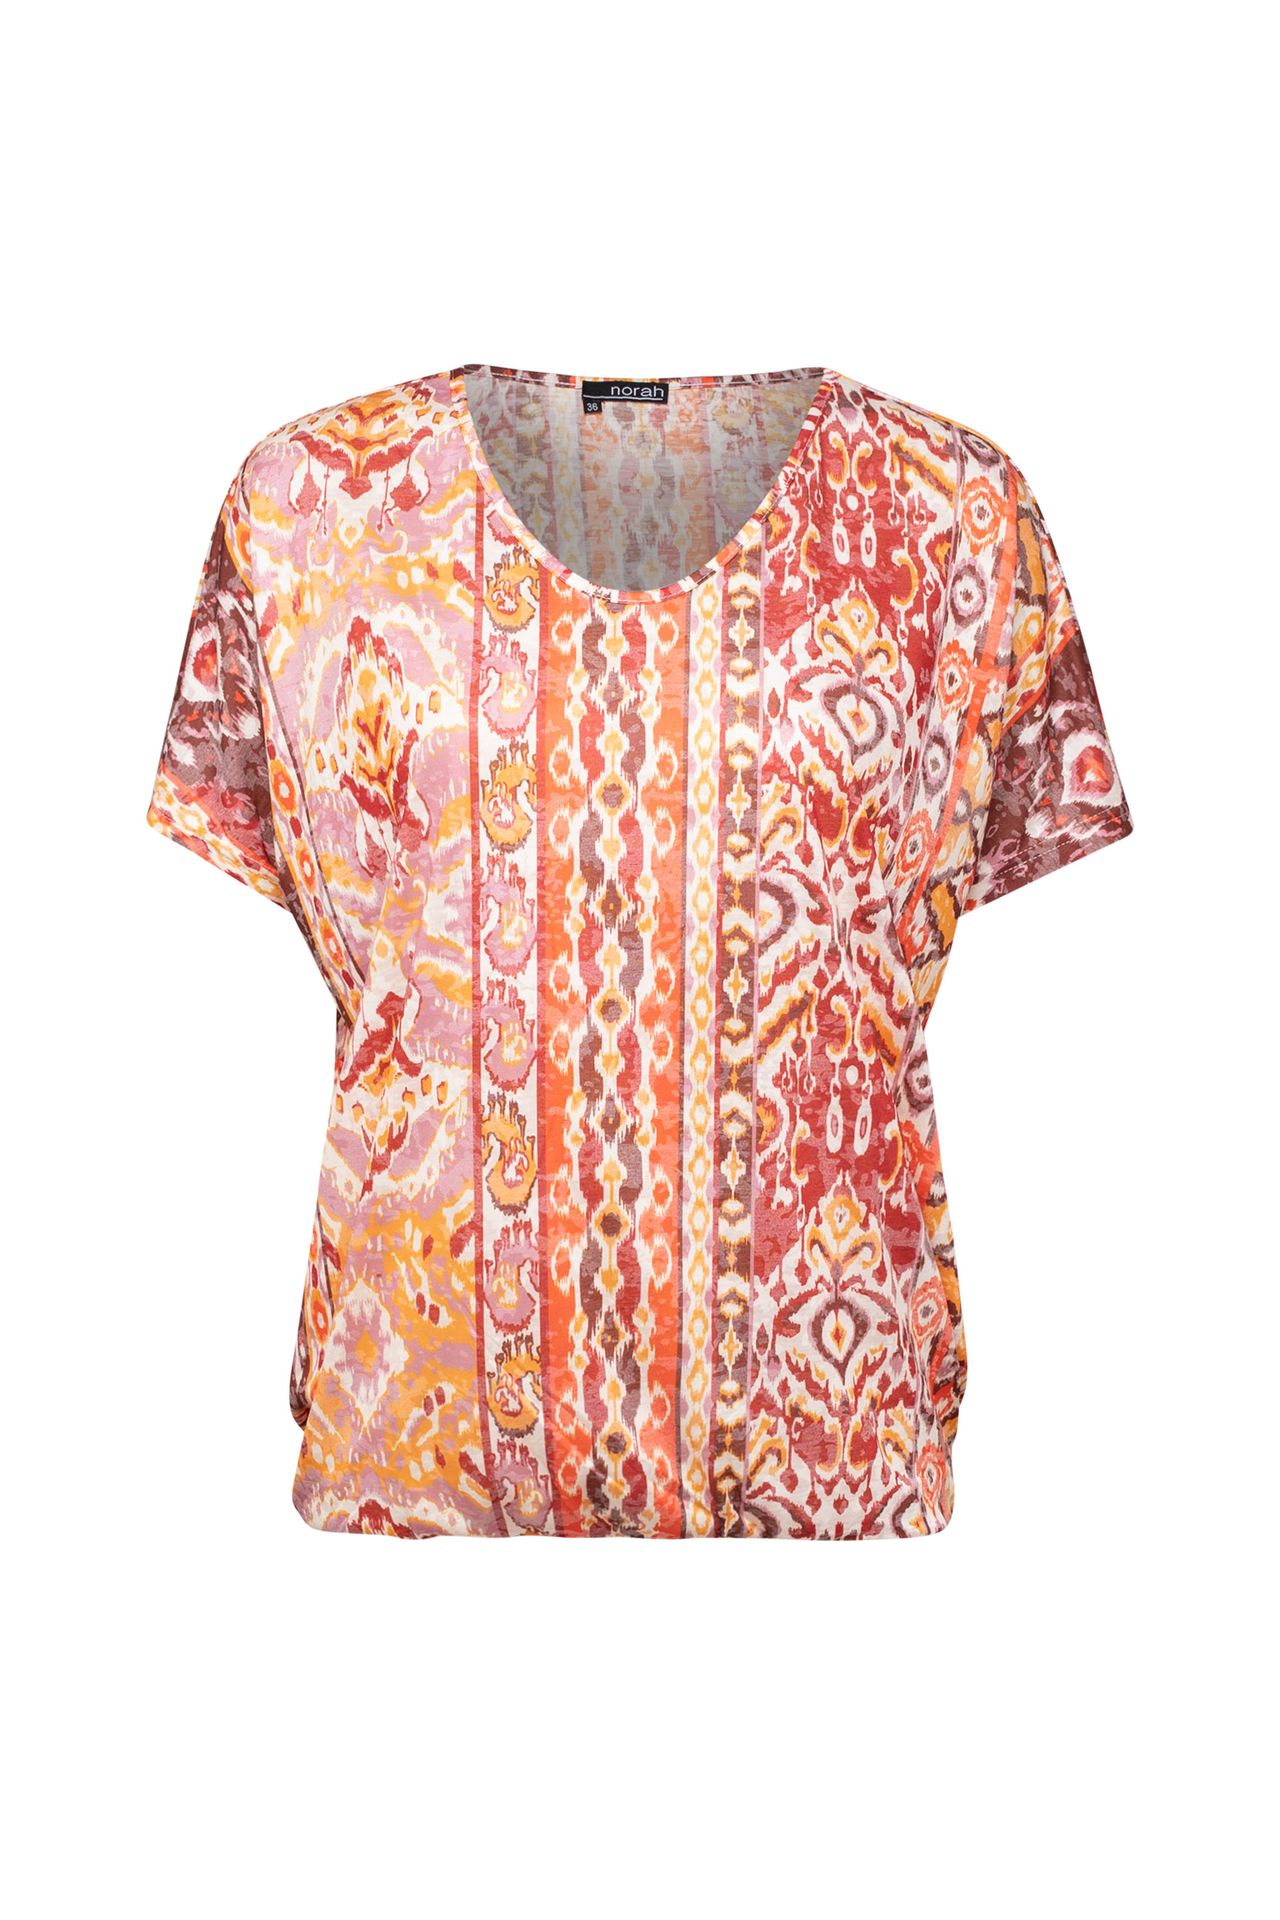 Norah Shirt oranje multi orange multicolor 213107-720